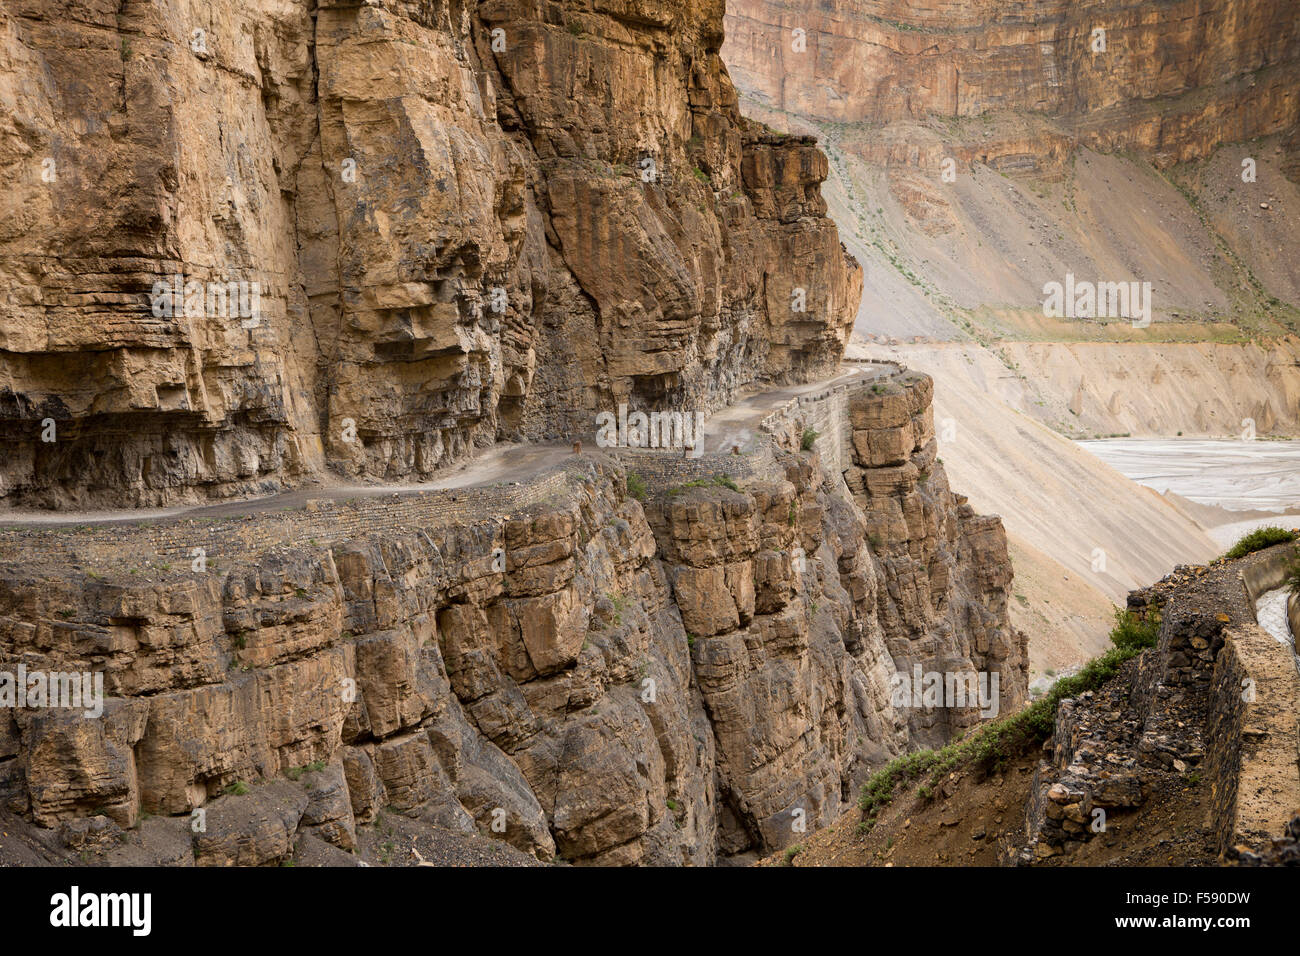 India, Himachal Pradesh, Spiti Valley, Losar, dangerous narrow mountain road cut into sheer cliff Stock Photo